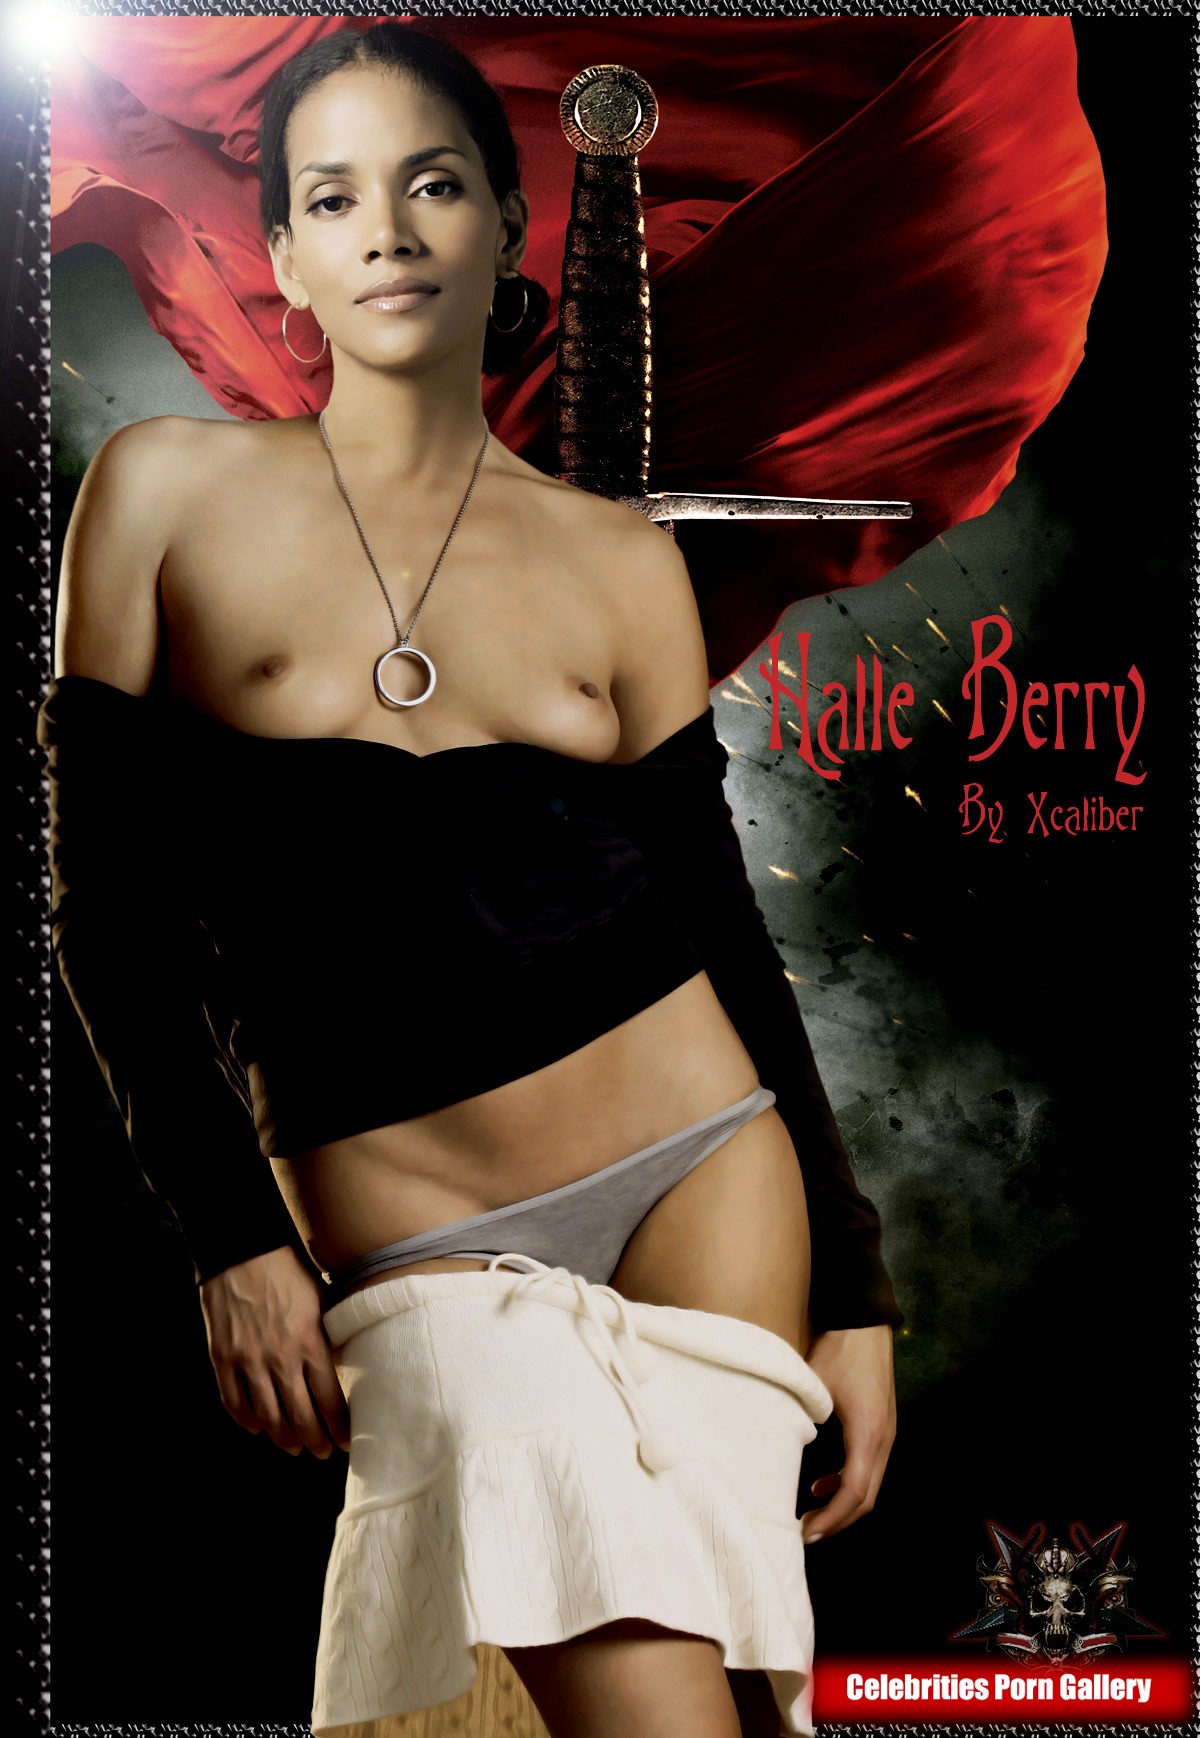 Halle-Berry-celebrity-nude-pics-img-026